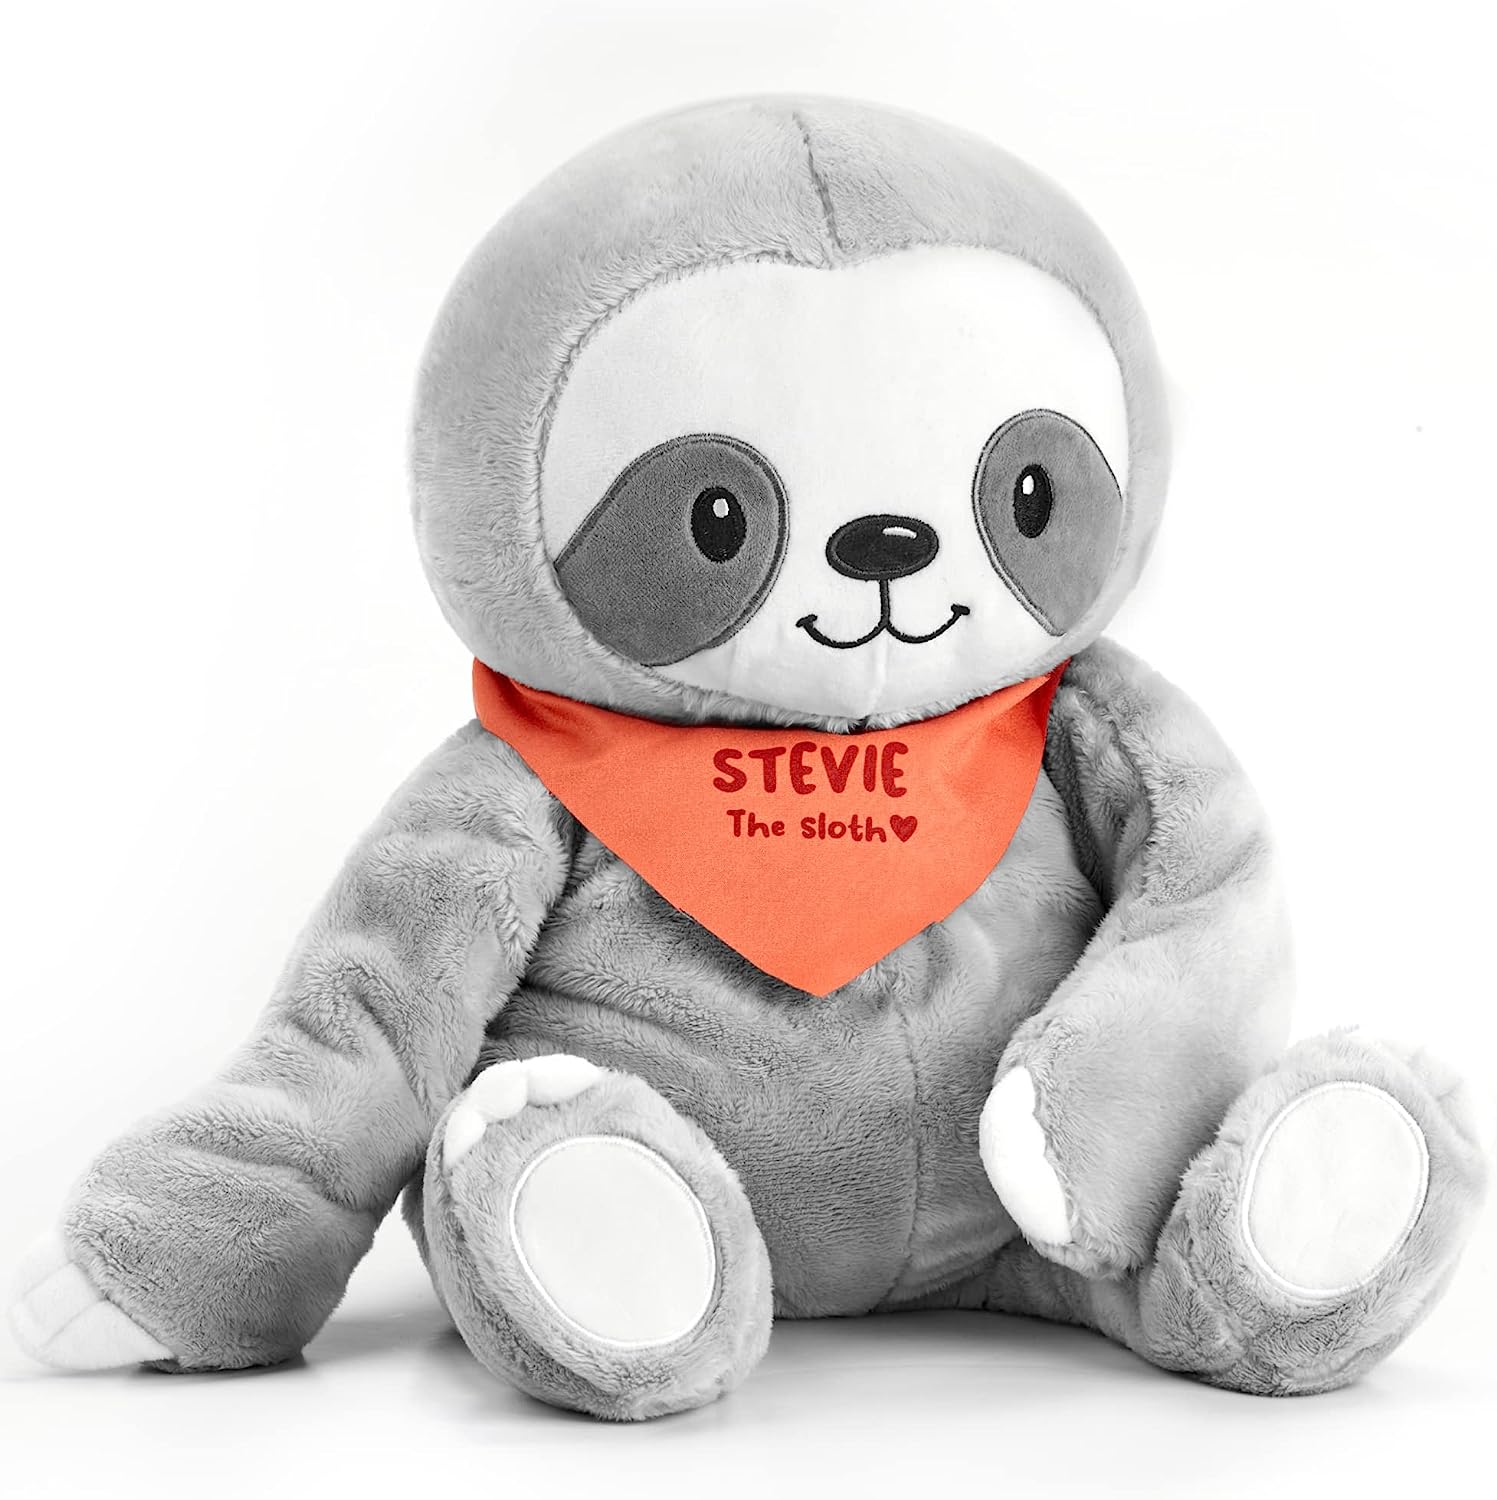 Stevie The Sloth